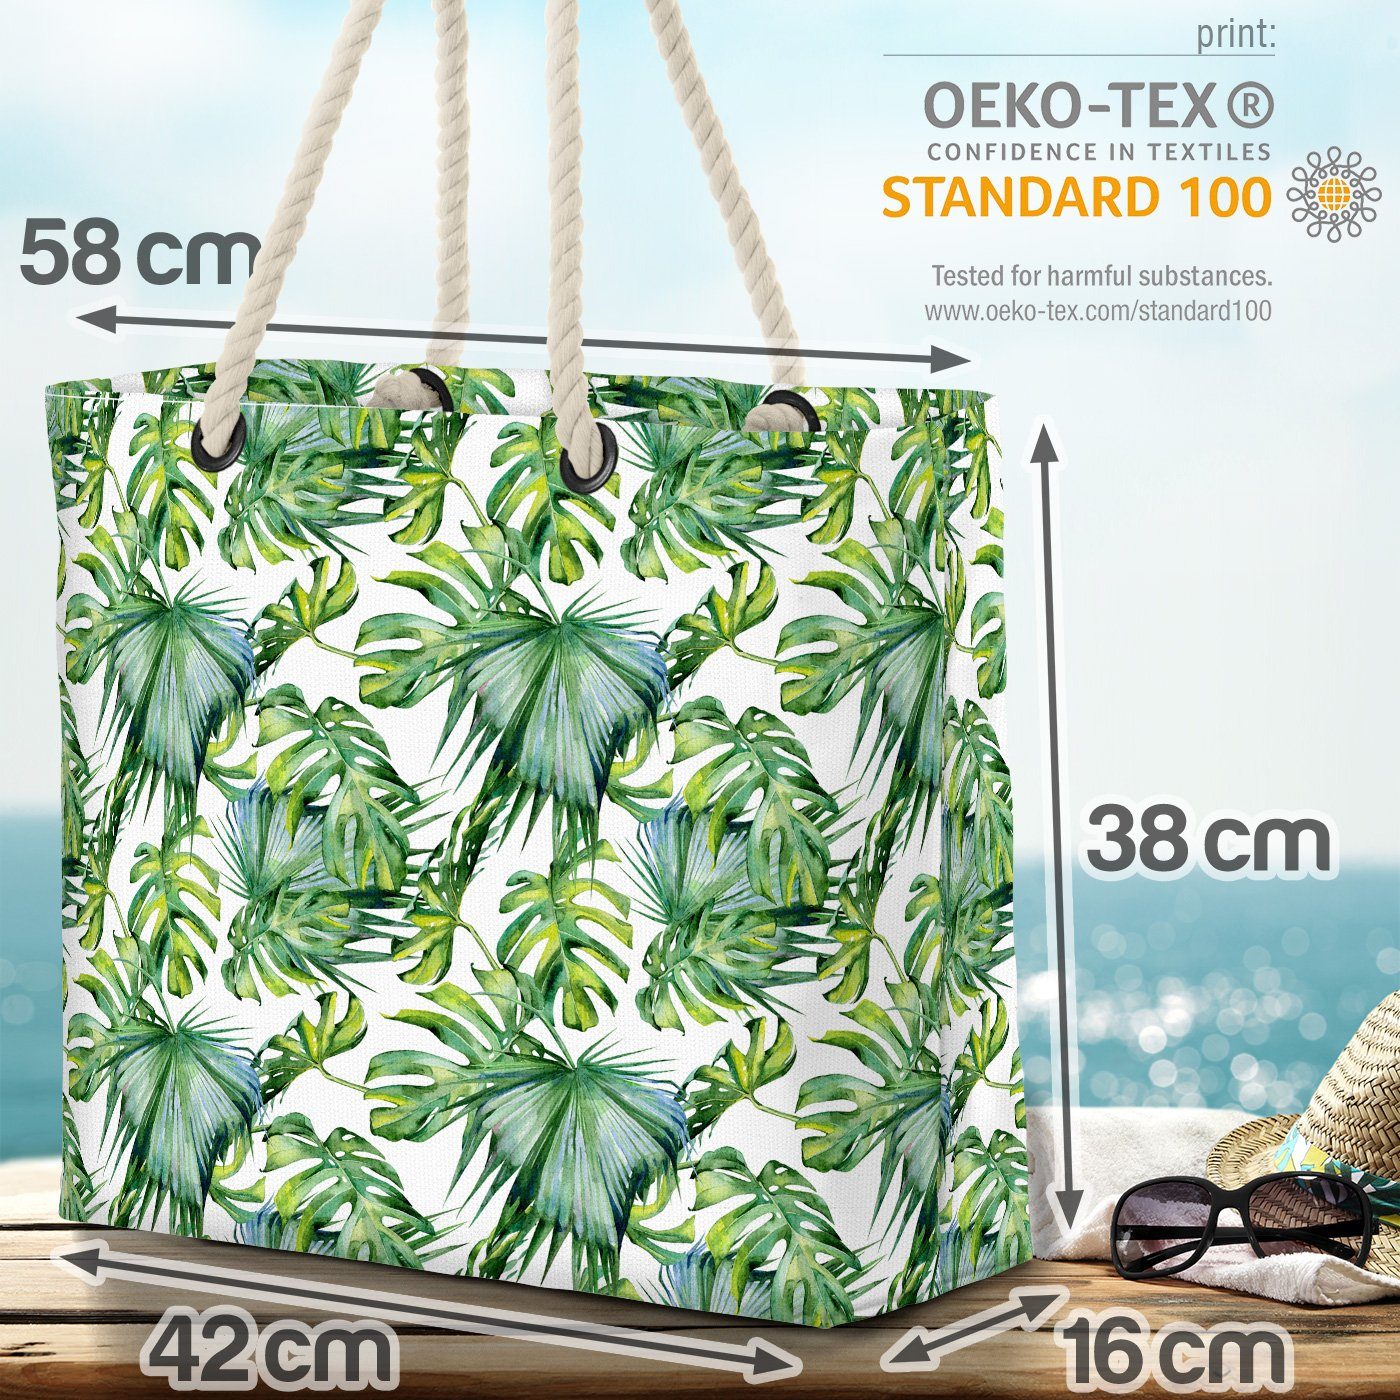 VOID Strandtasche (1-tlg), Dschungel palme Beach bunt muster baum garten Bag pflanze Natur Blätter Muster